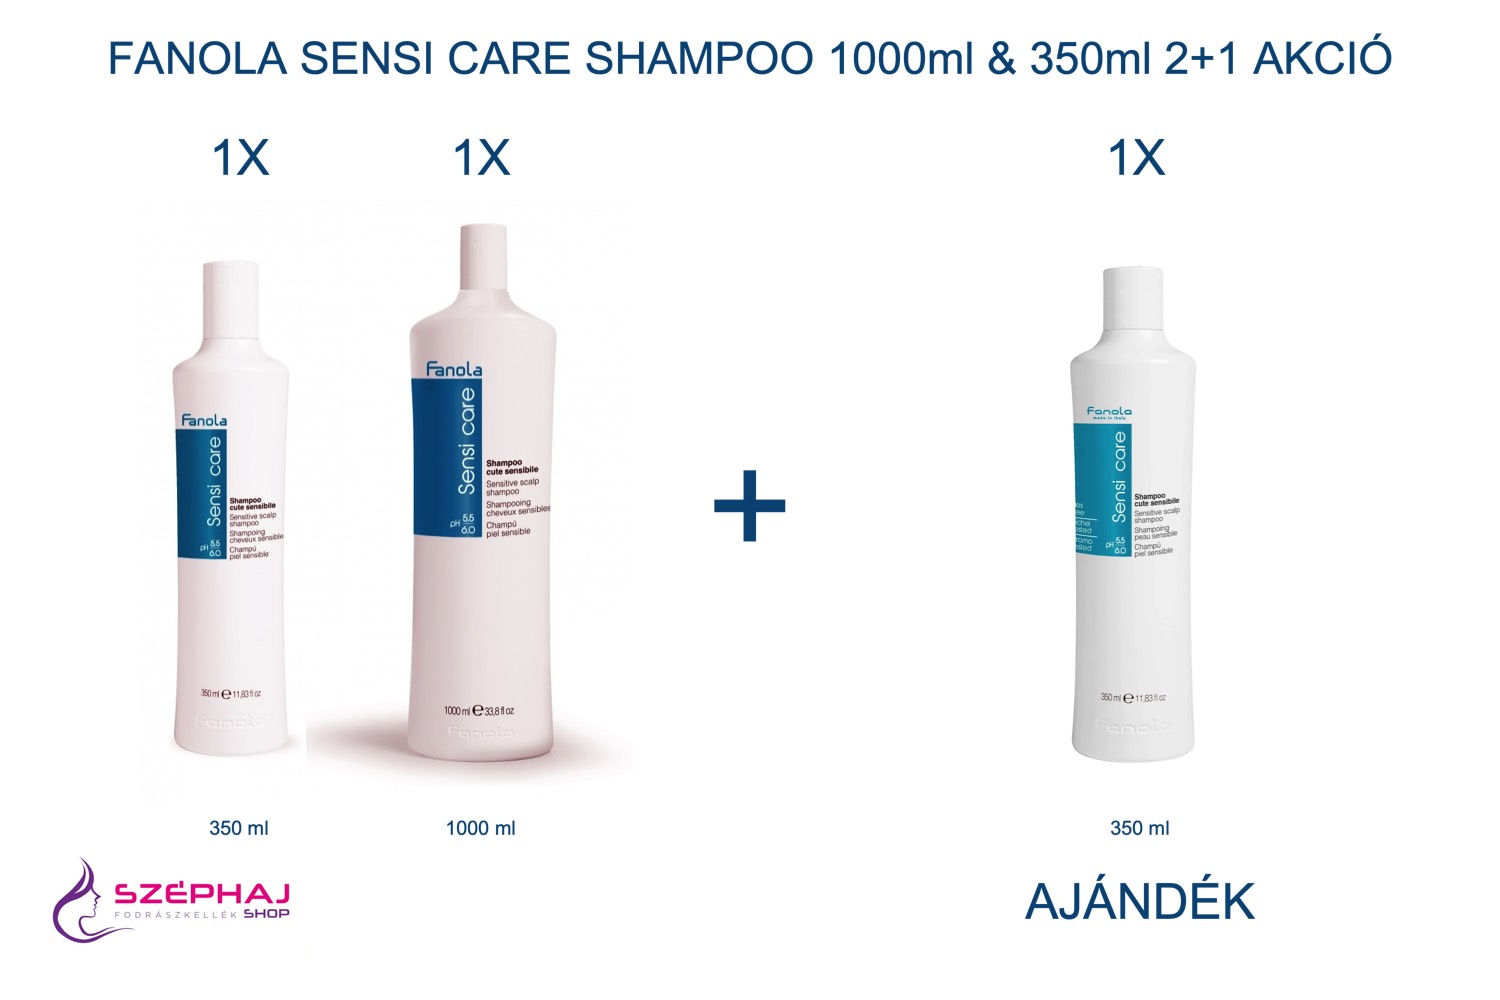 FANOLA Sensi Care Shampoo 1000 ml & 350 ml 2+1 AKCIÓ